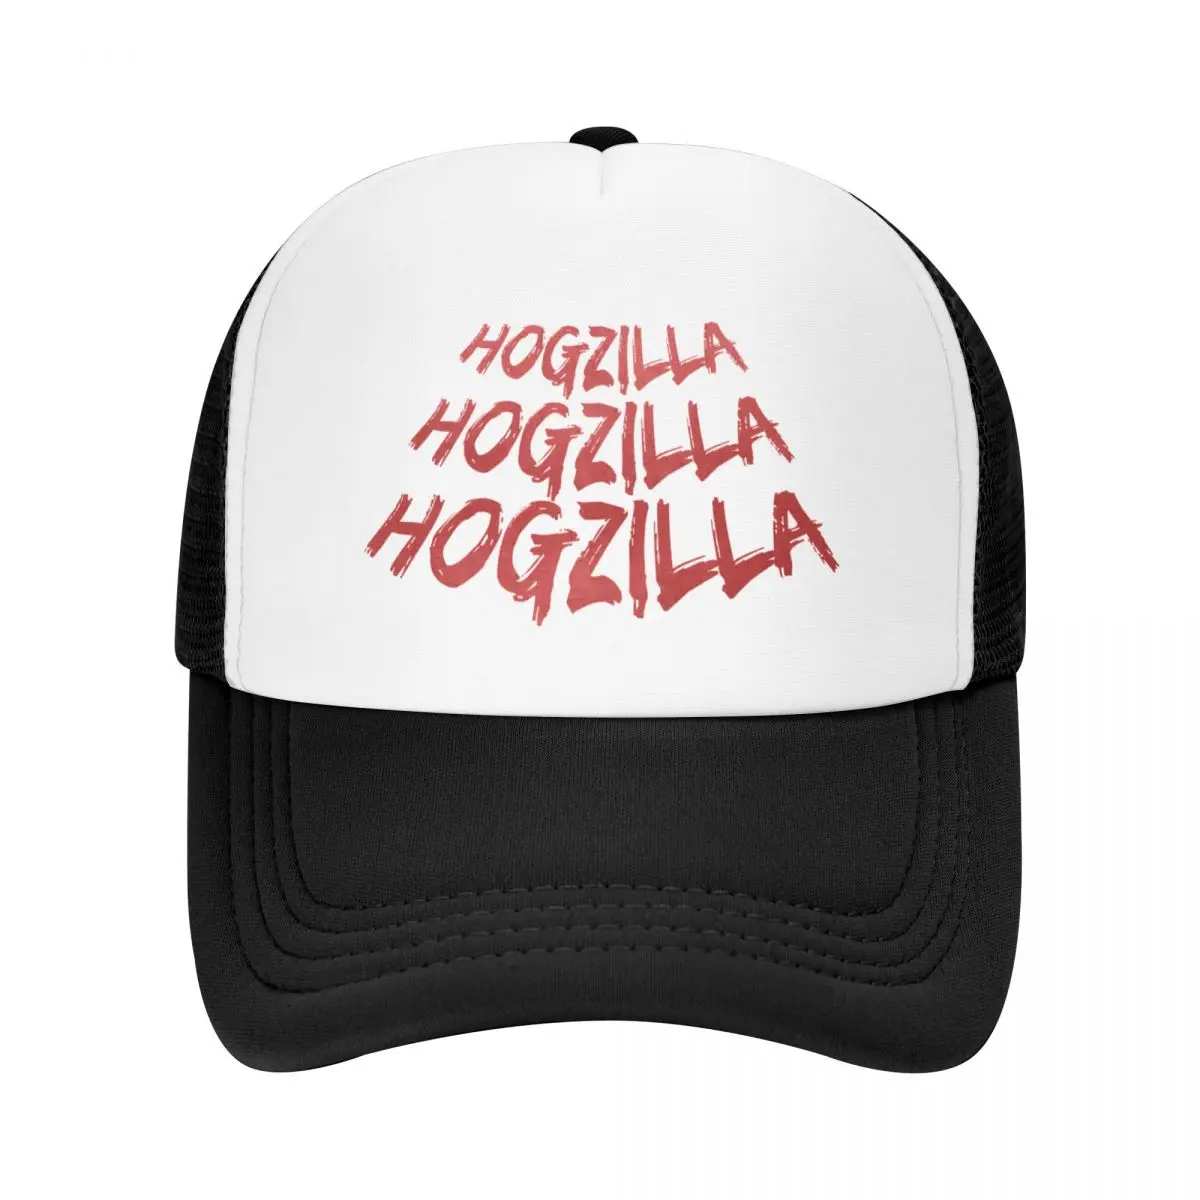 Hogzilla Бейсболка Hogzilla Hogzilla, бейсболка для папы, пляжные шляпы для женщин и мужчин